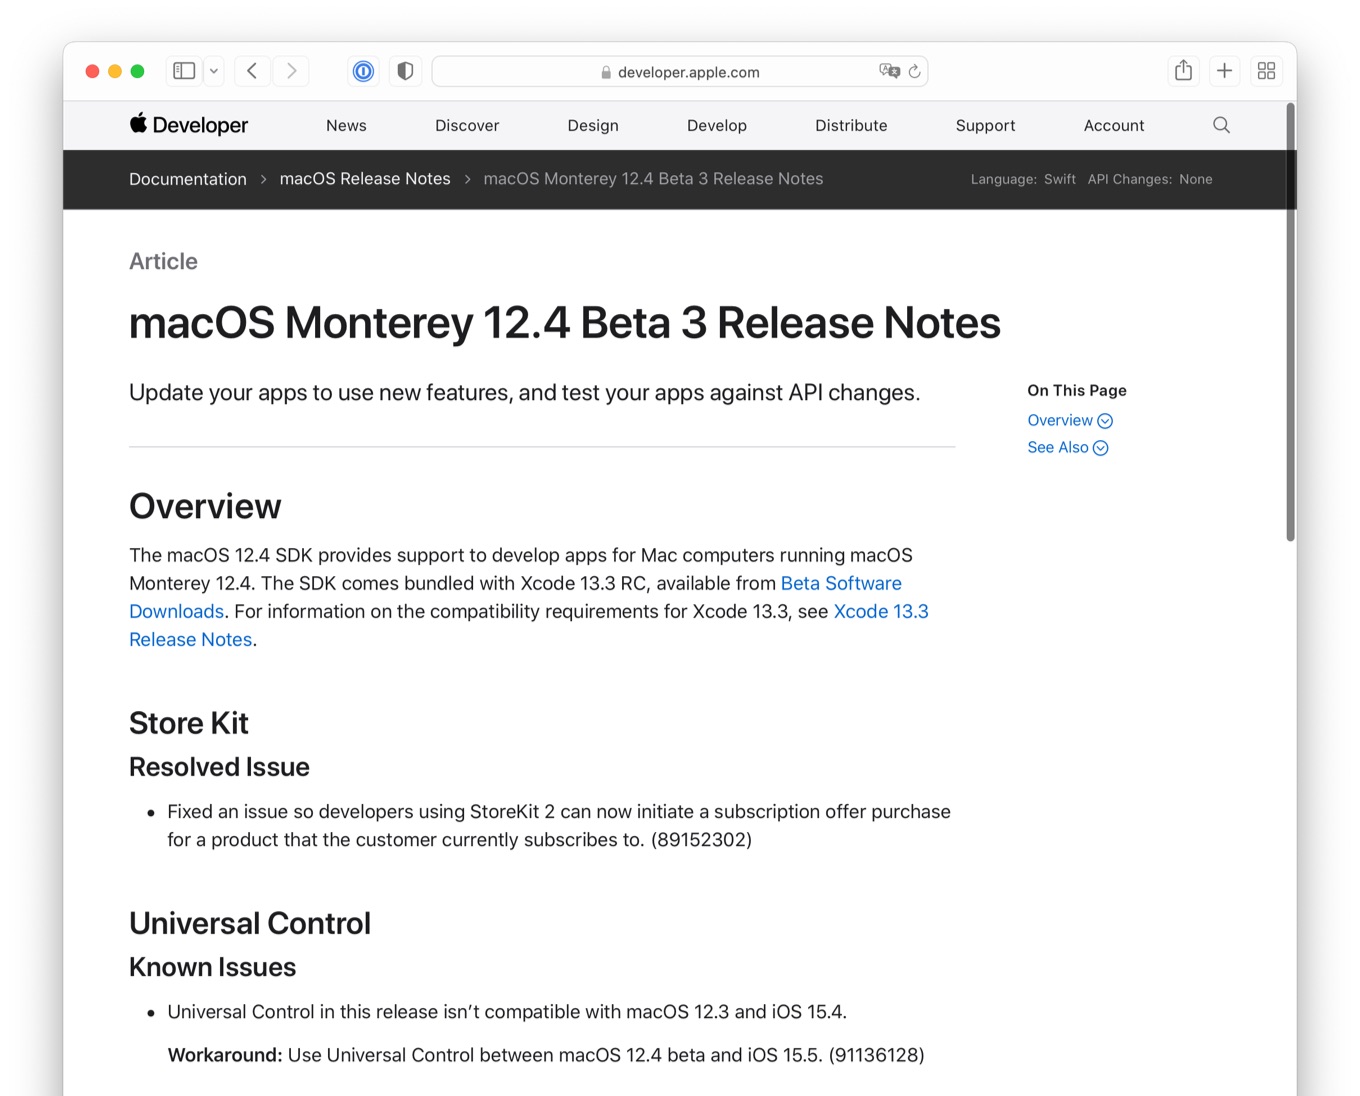 macOS Monterey 12.4 Beta 3 Release Notes